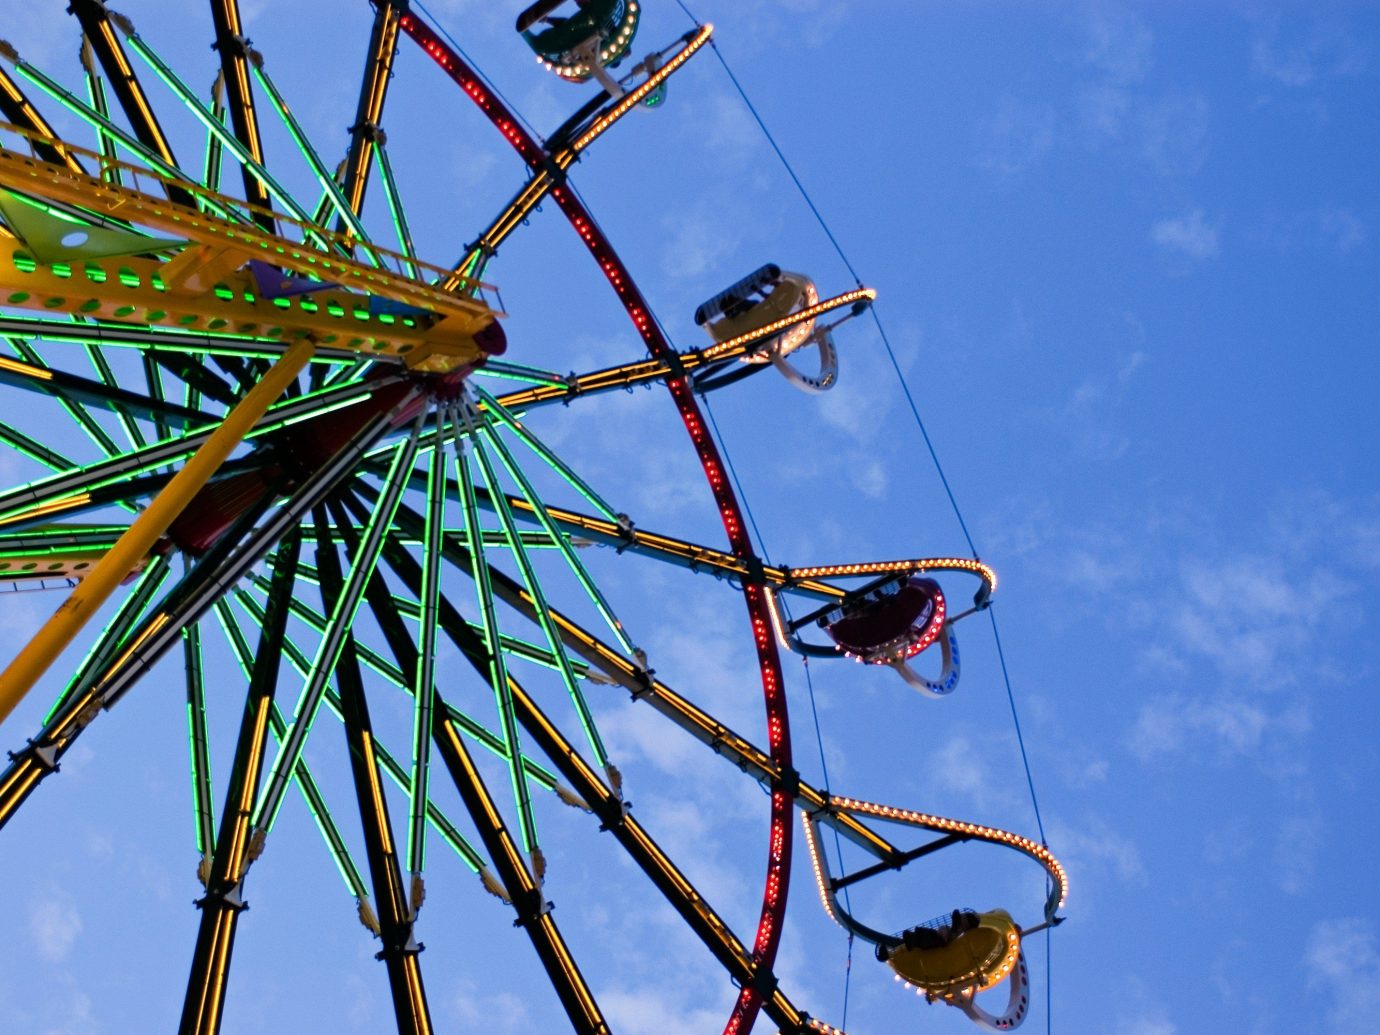 Offbeat sky outdoor blue ferris wheel tree ride plant outdoor object arecales flower mast amusement park roller coaster